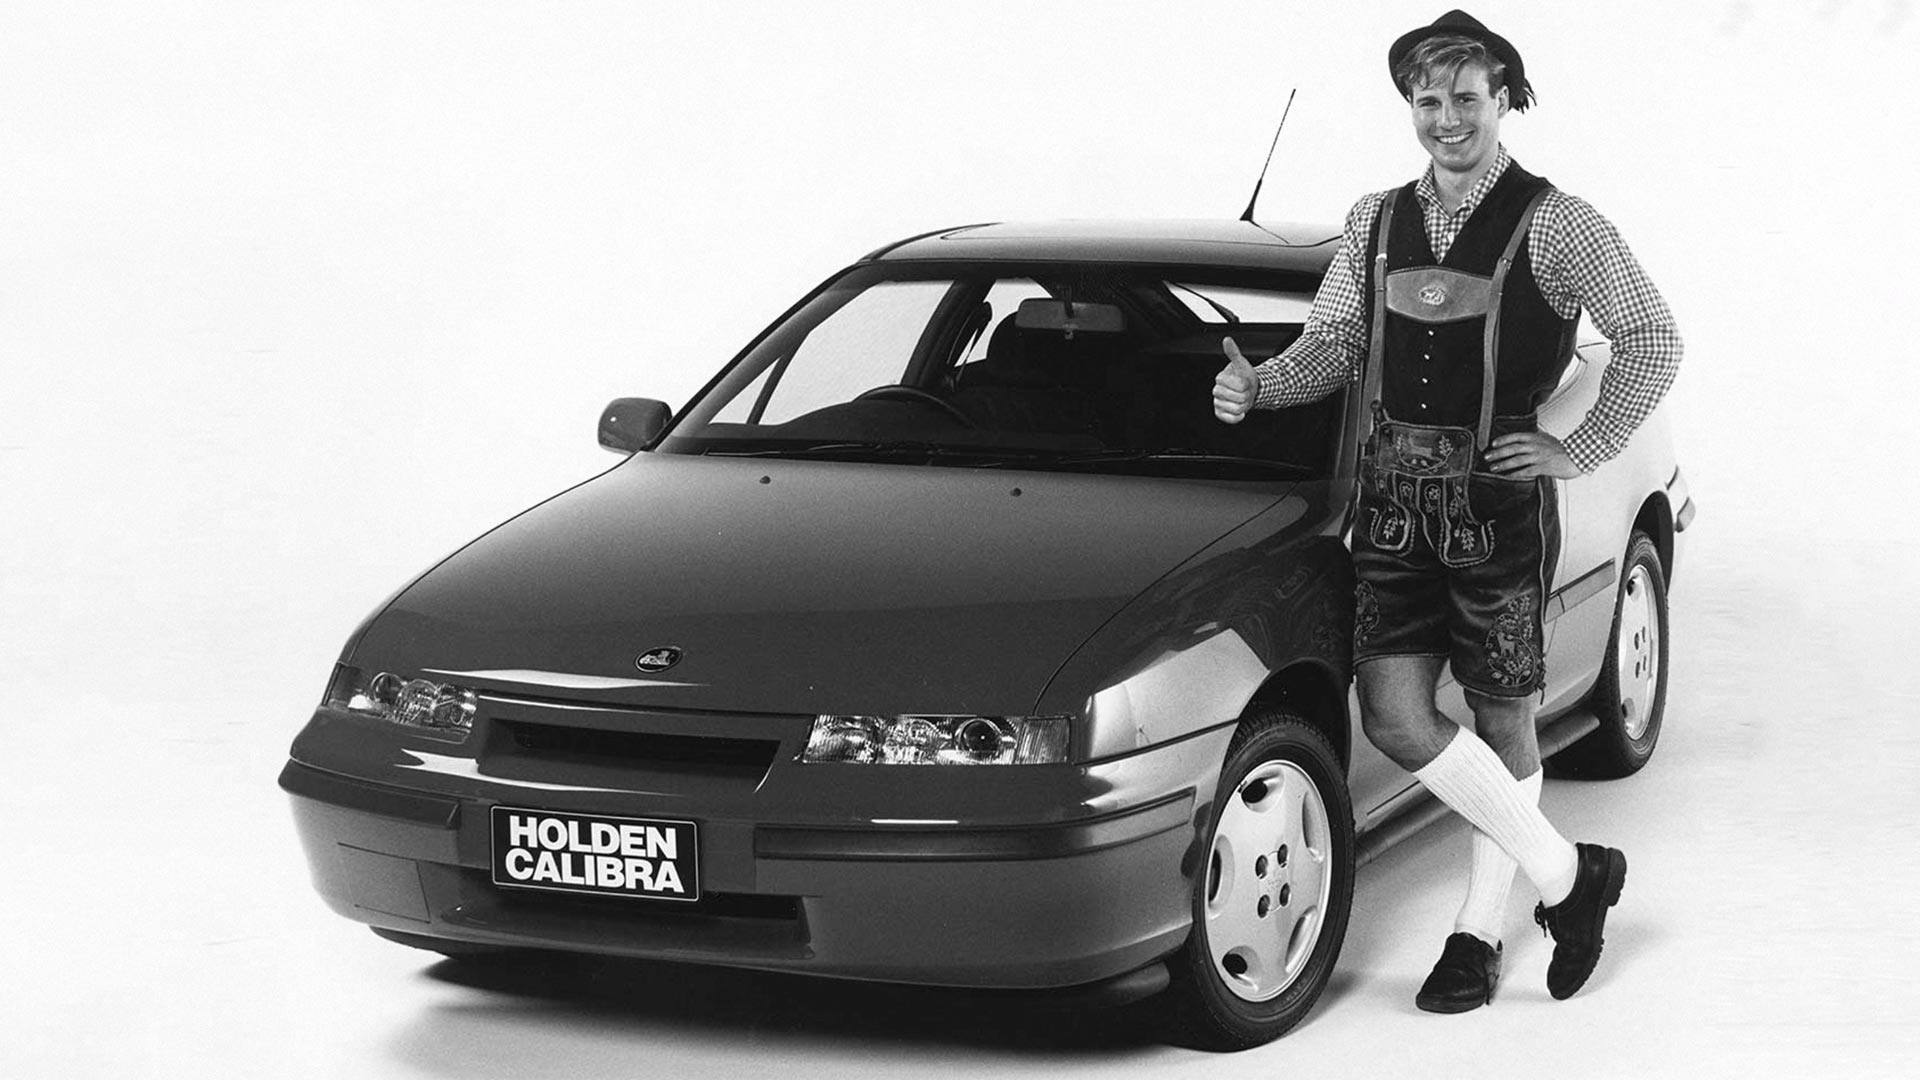 Holden Calibra